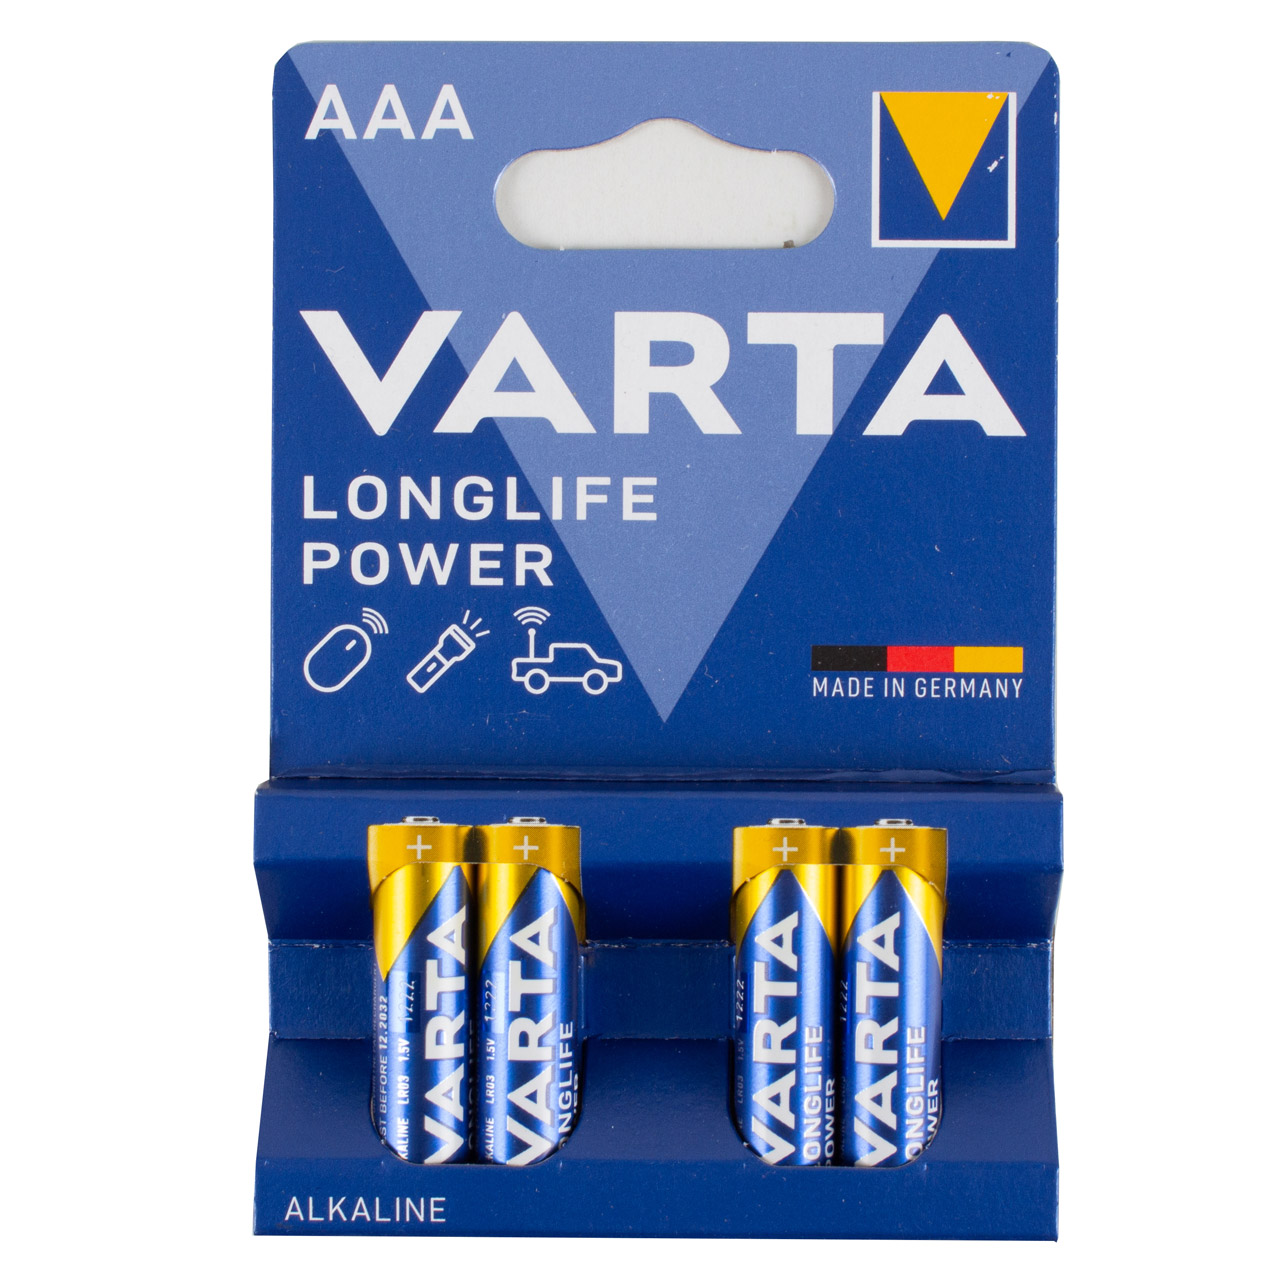 20x VARTA LONGLIFE POWER ALKALINE Batterie AAA MICRO 4903 LR03 MN2400 1,5V